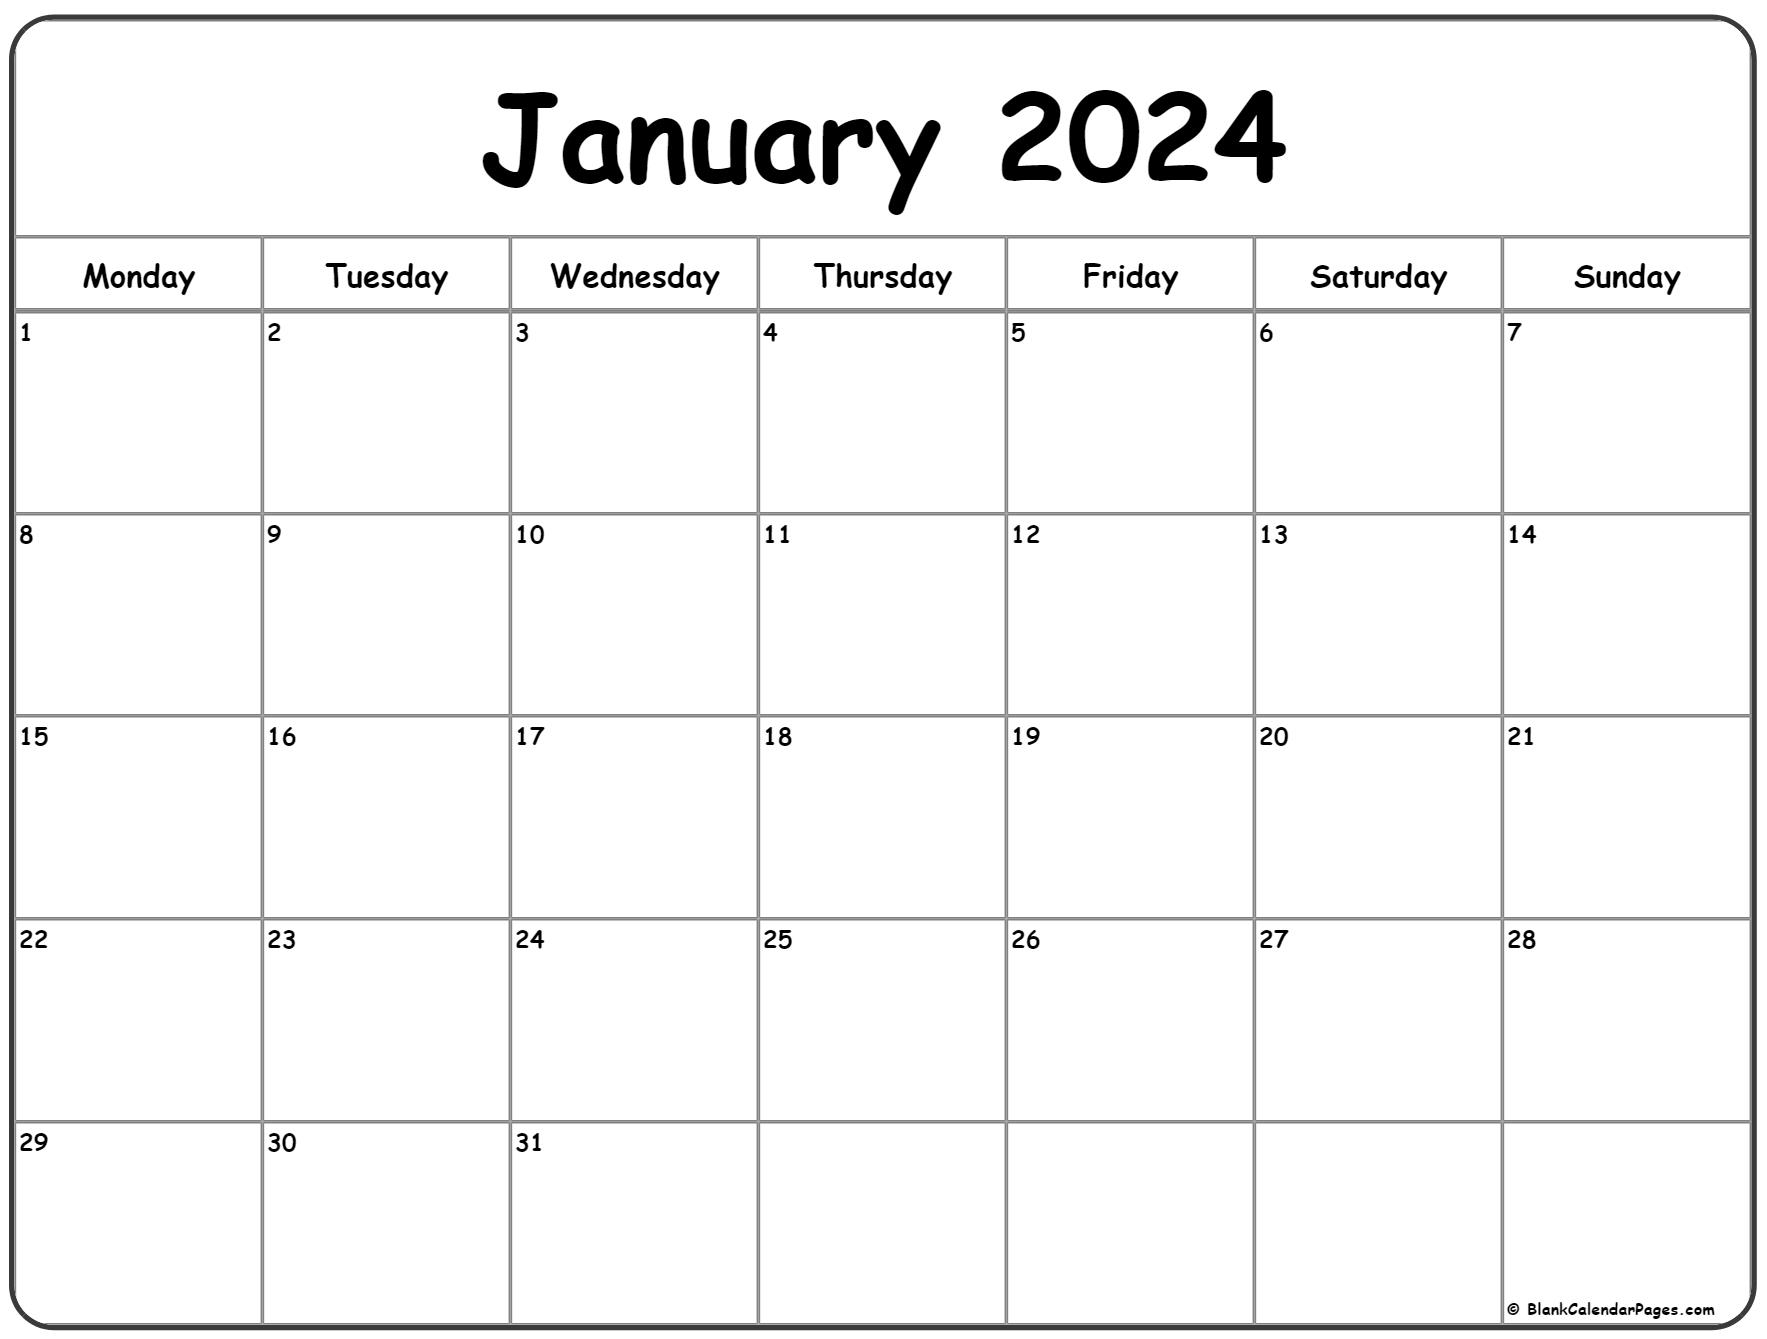 January 2024 Monday Calendar | Monday To Sunday for Januar 2024 Calendar Printable